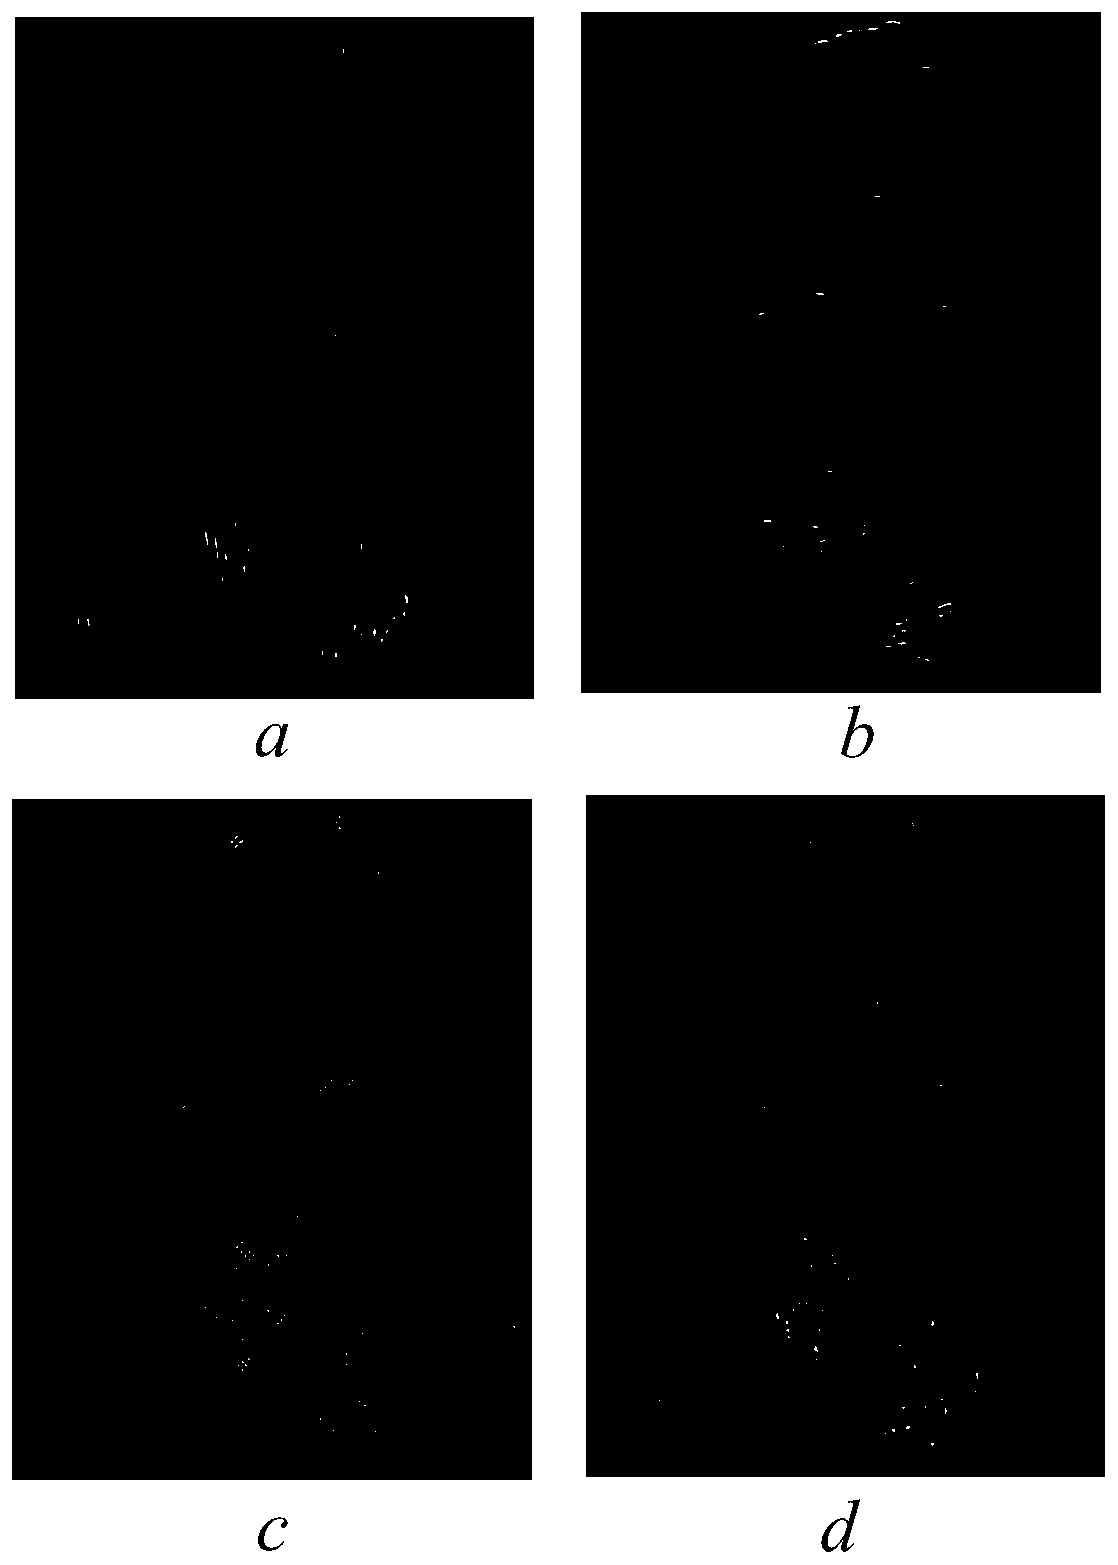 Image edge detection method based on six-order spline scale function